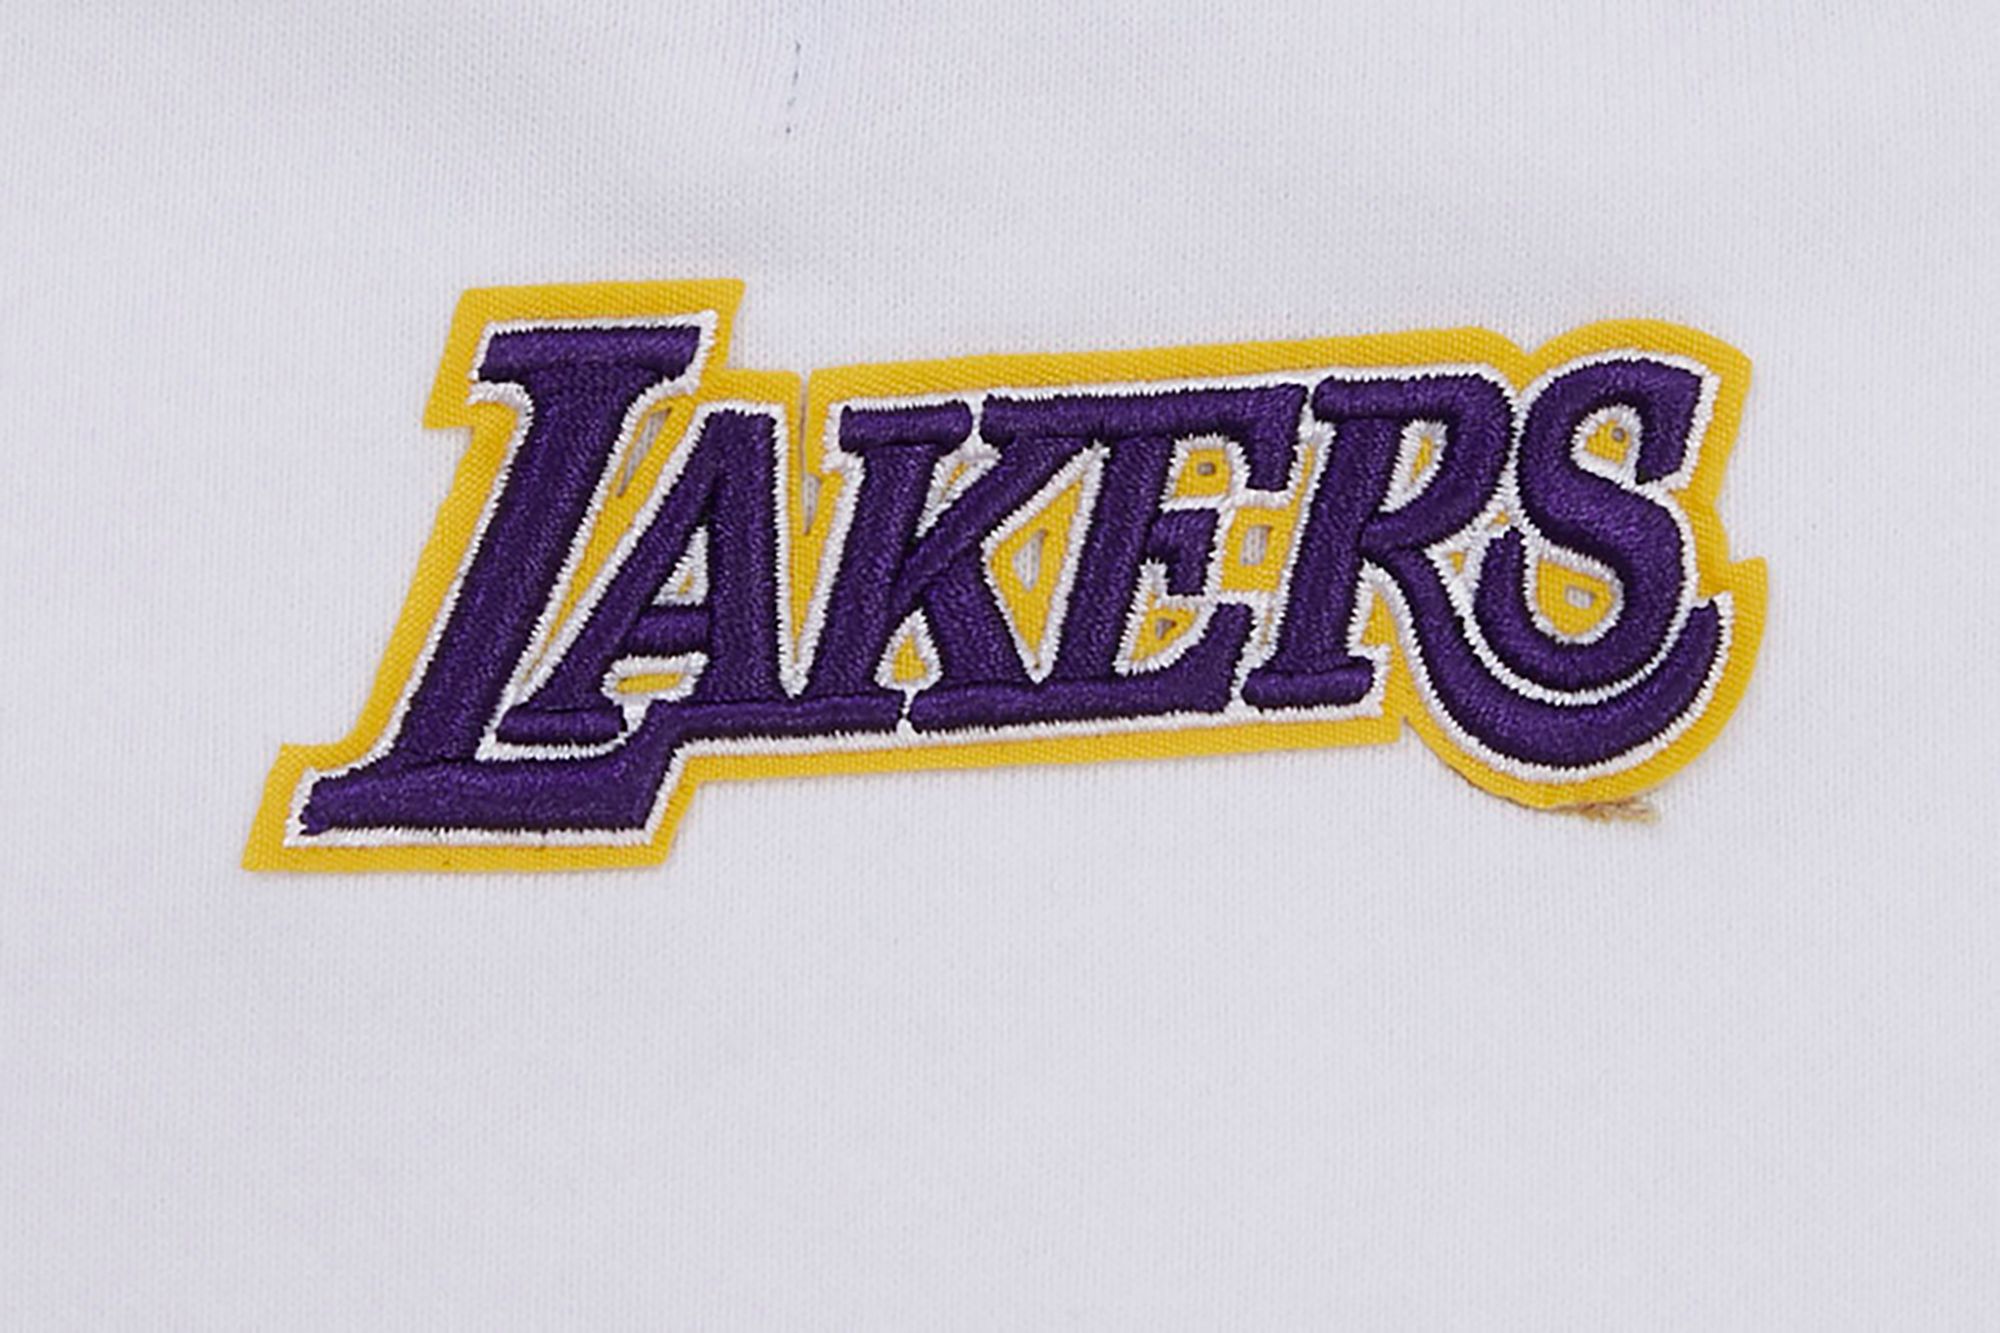 Pro Standard Women's Los Angeles Lakers Fleece Crewneck Sweater